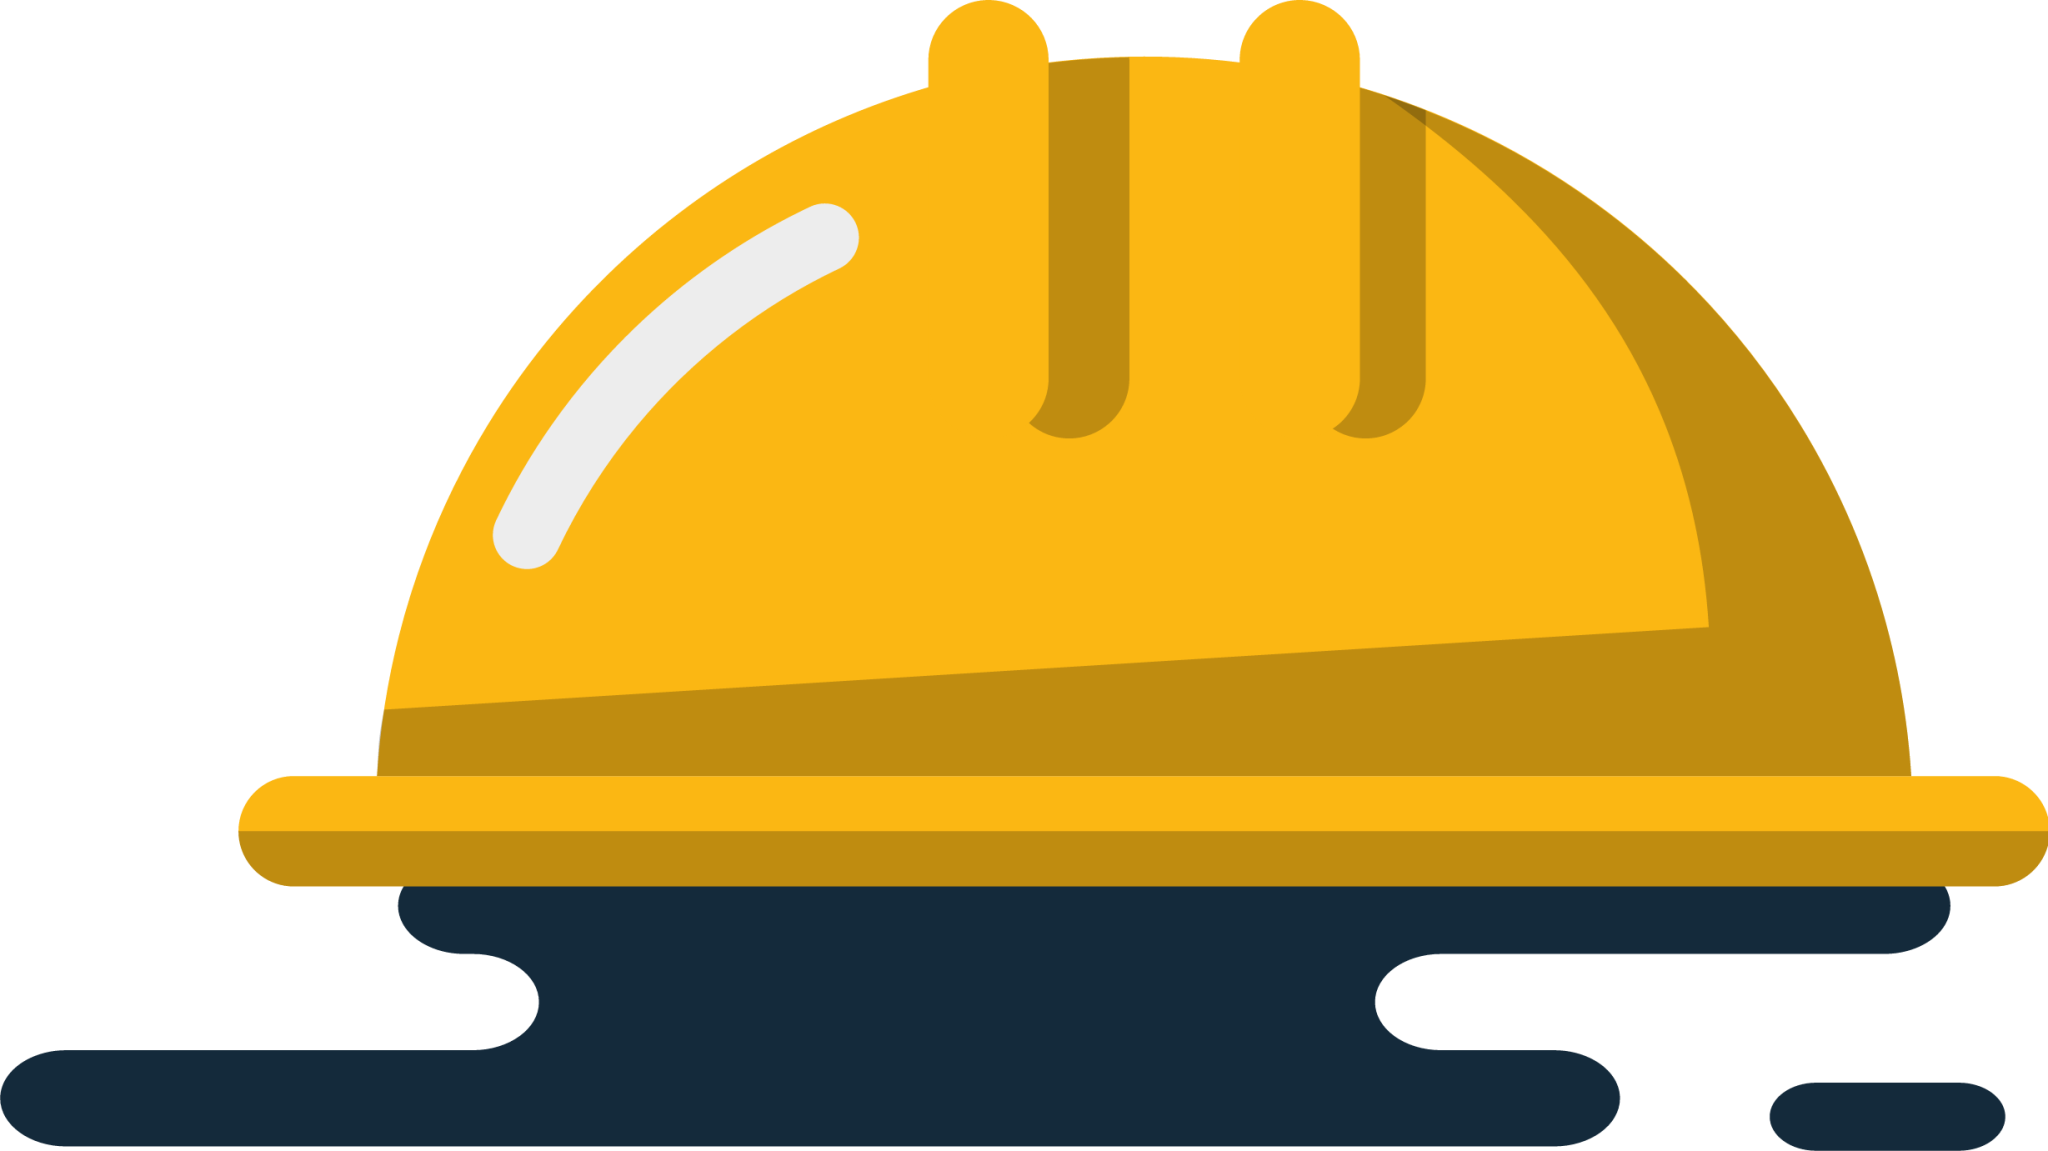 engineer cap illustration